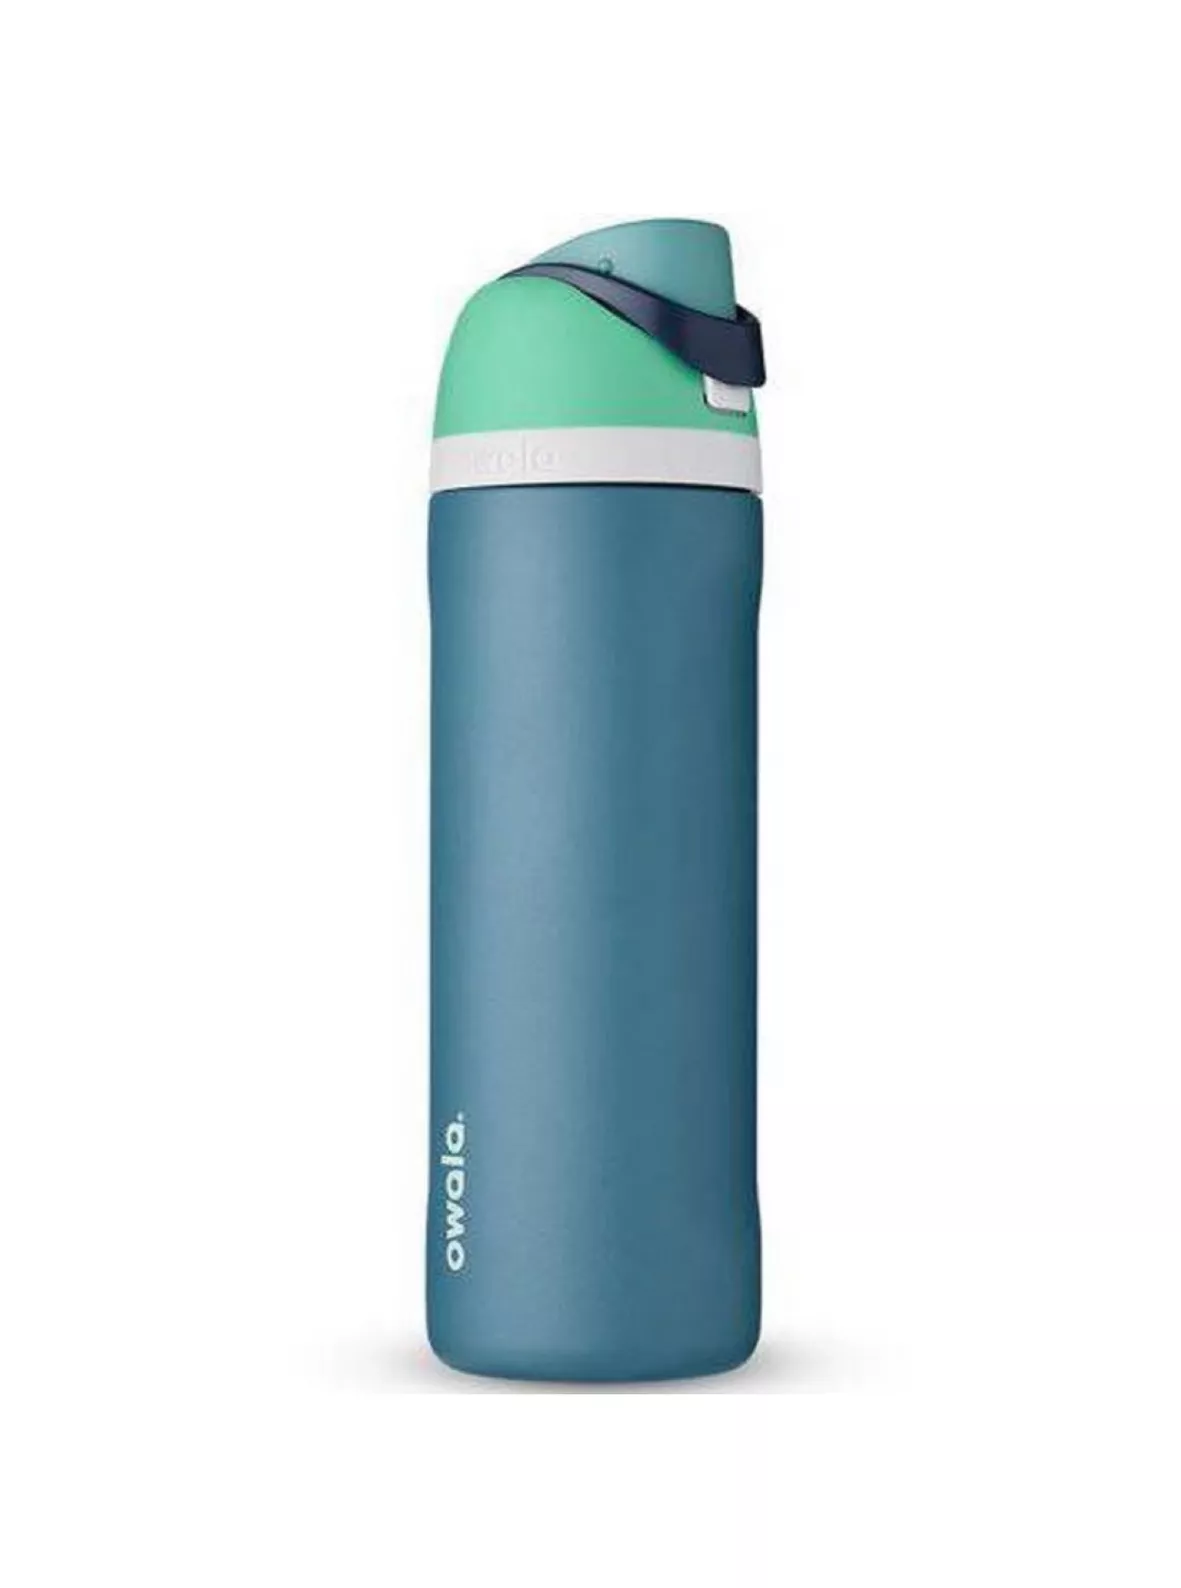 Owala FreeSip Stainless Steel Water Bottle / 24oz / Color: Maroon